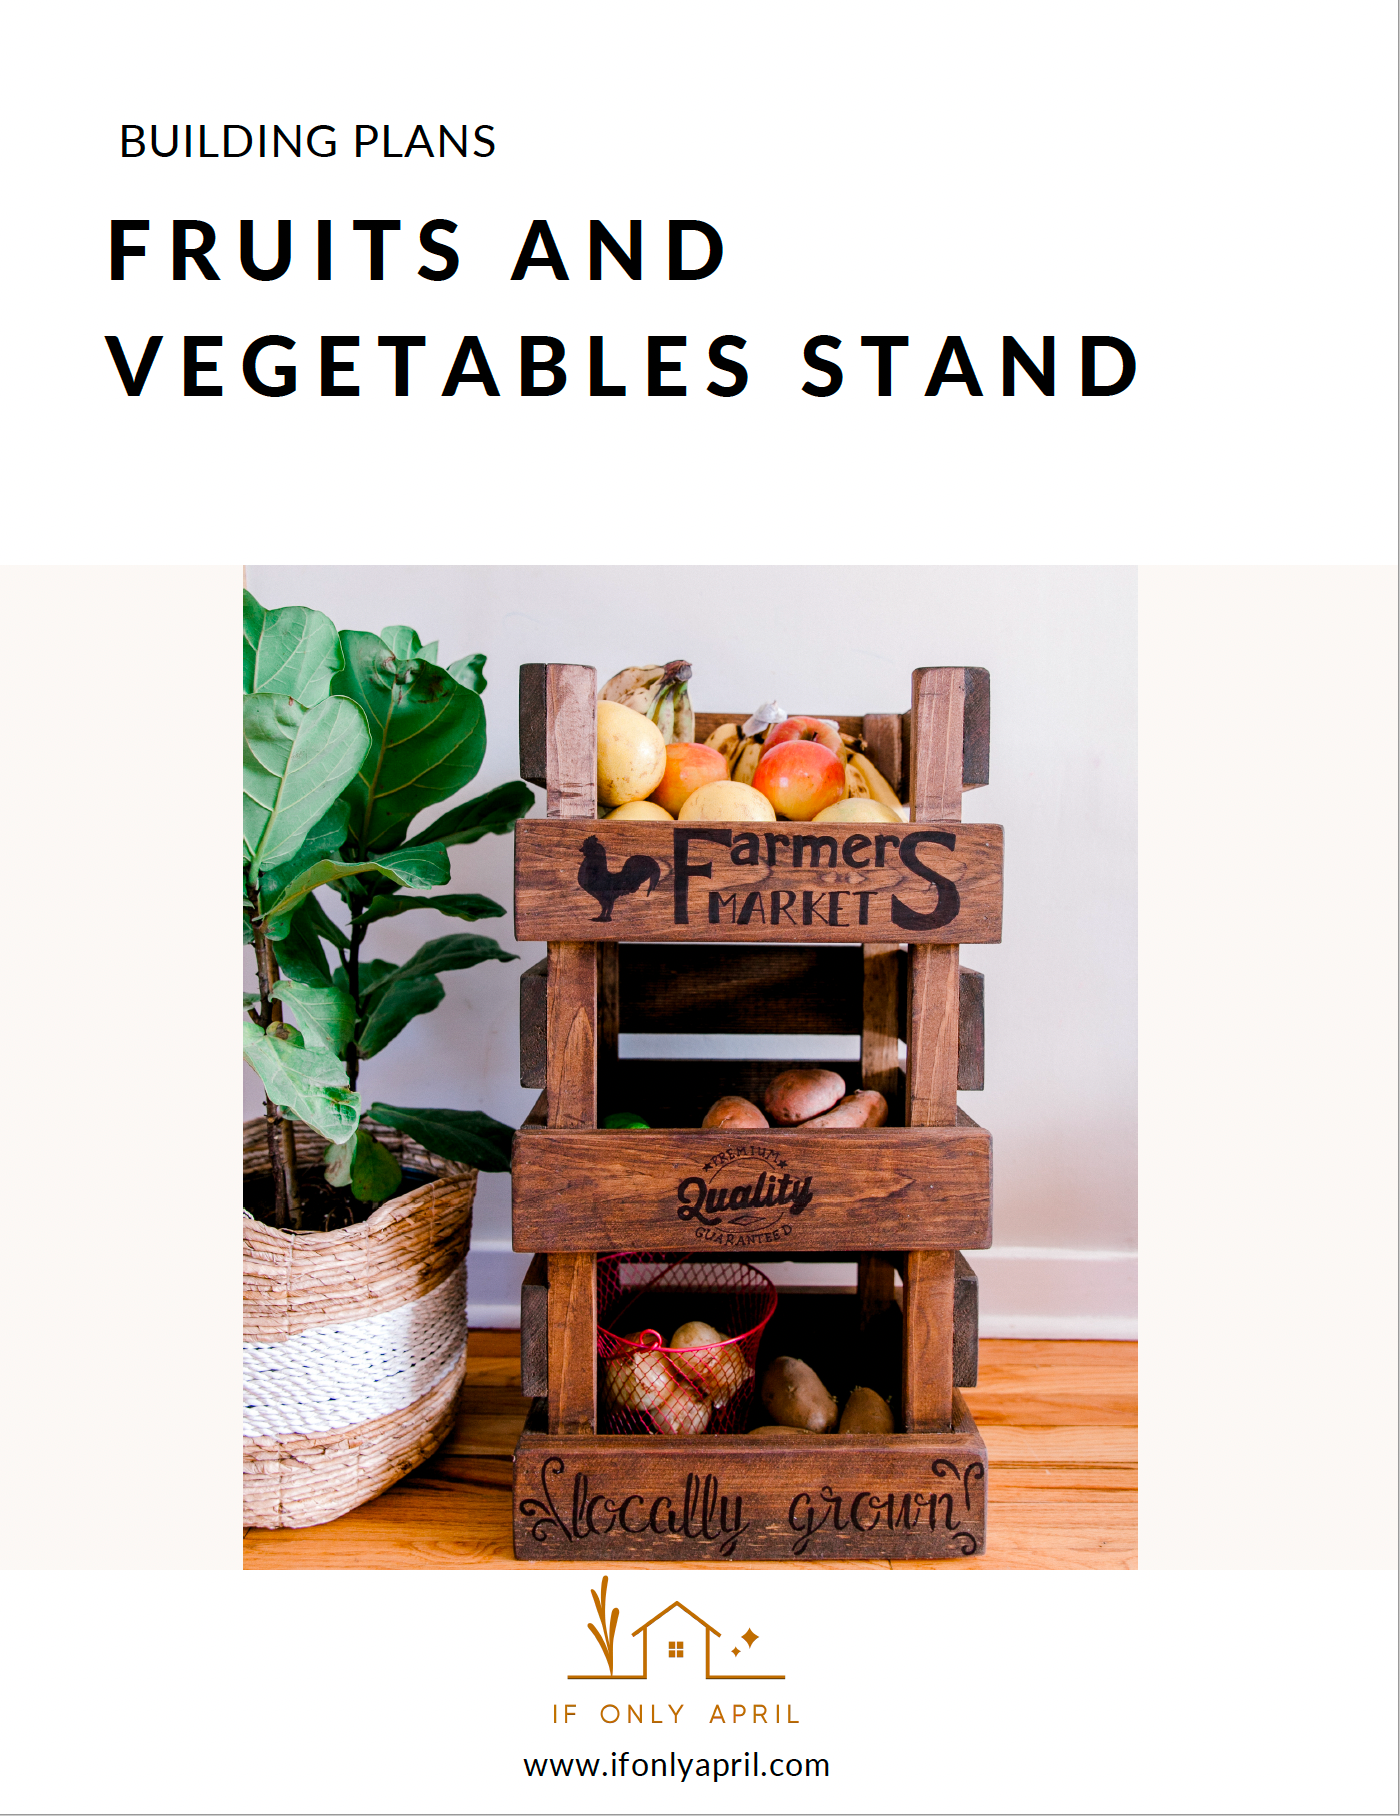 DIY Fruit Veggie Storage Rack